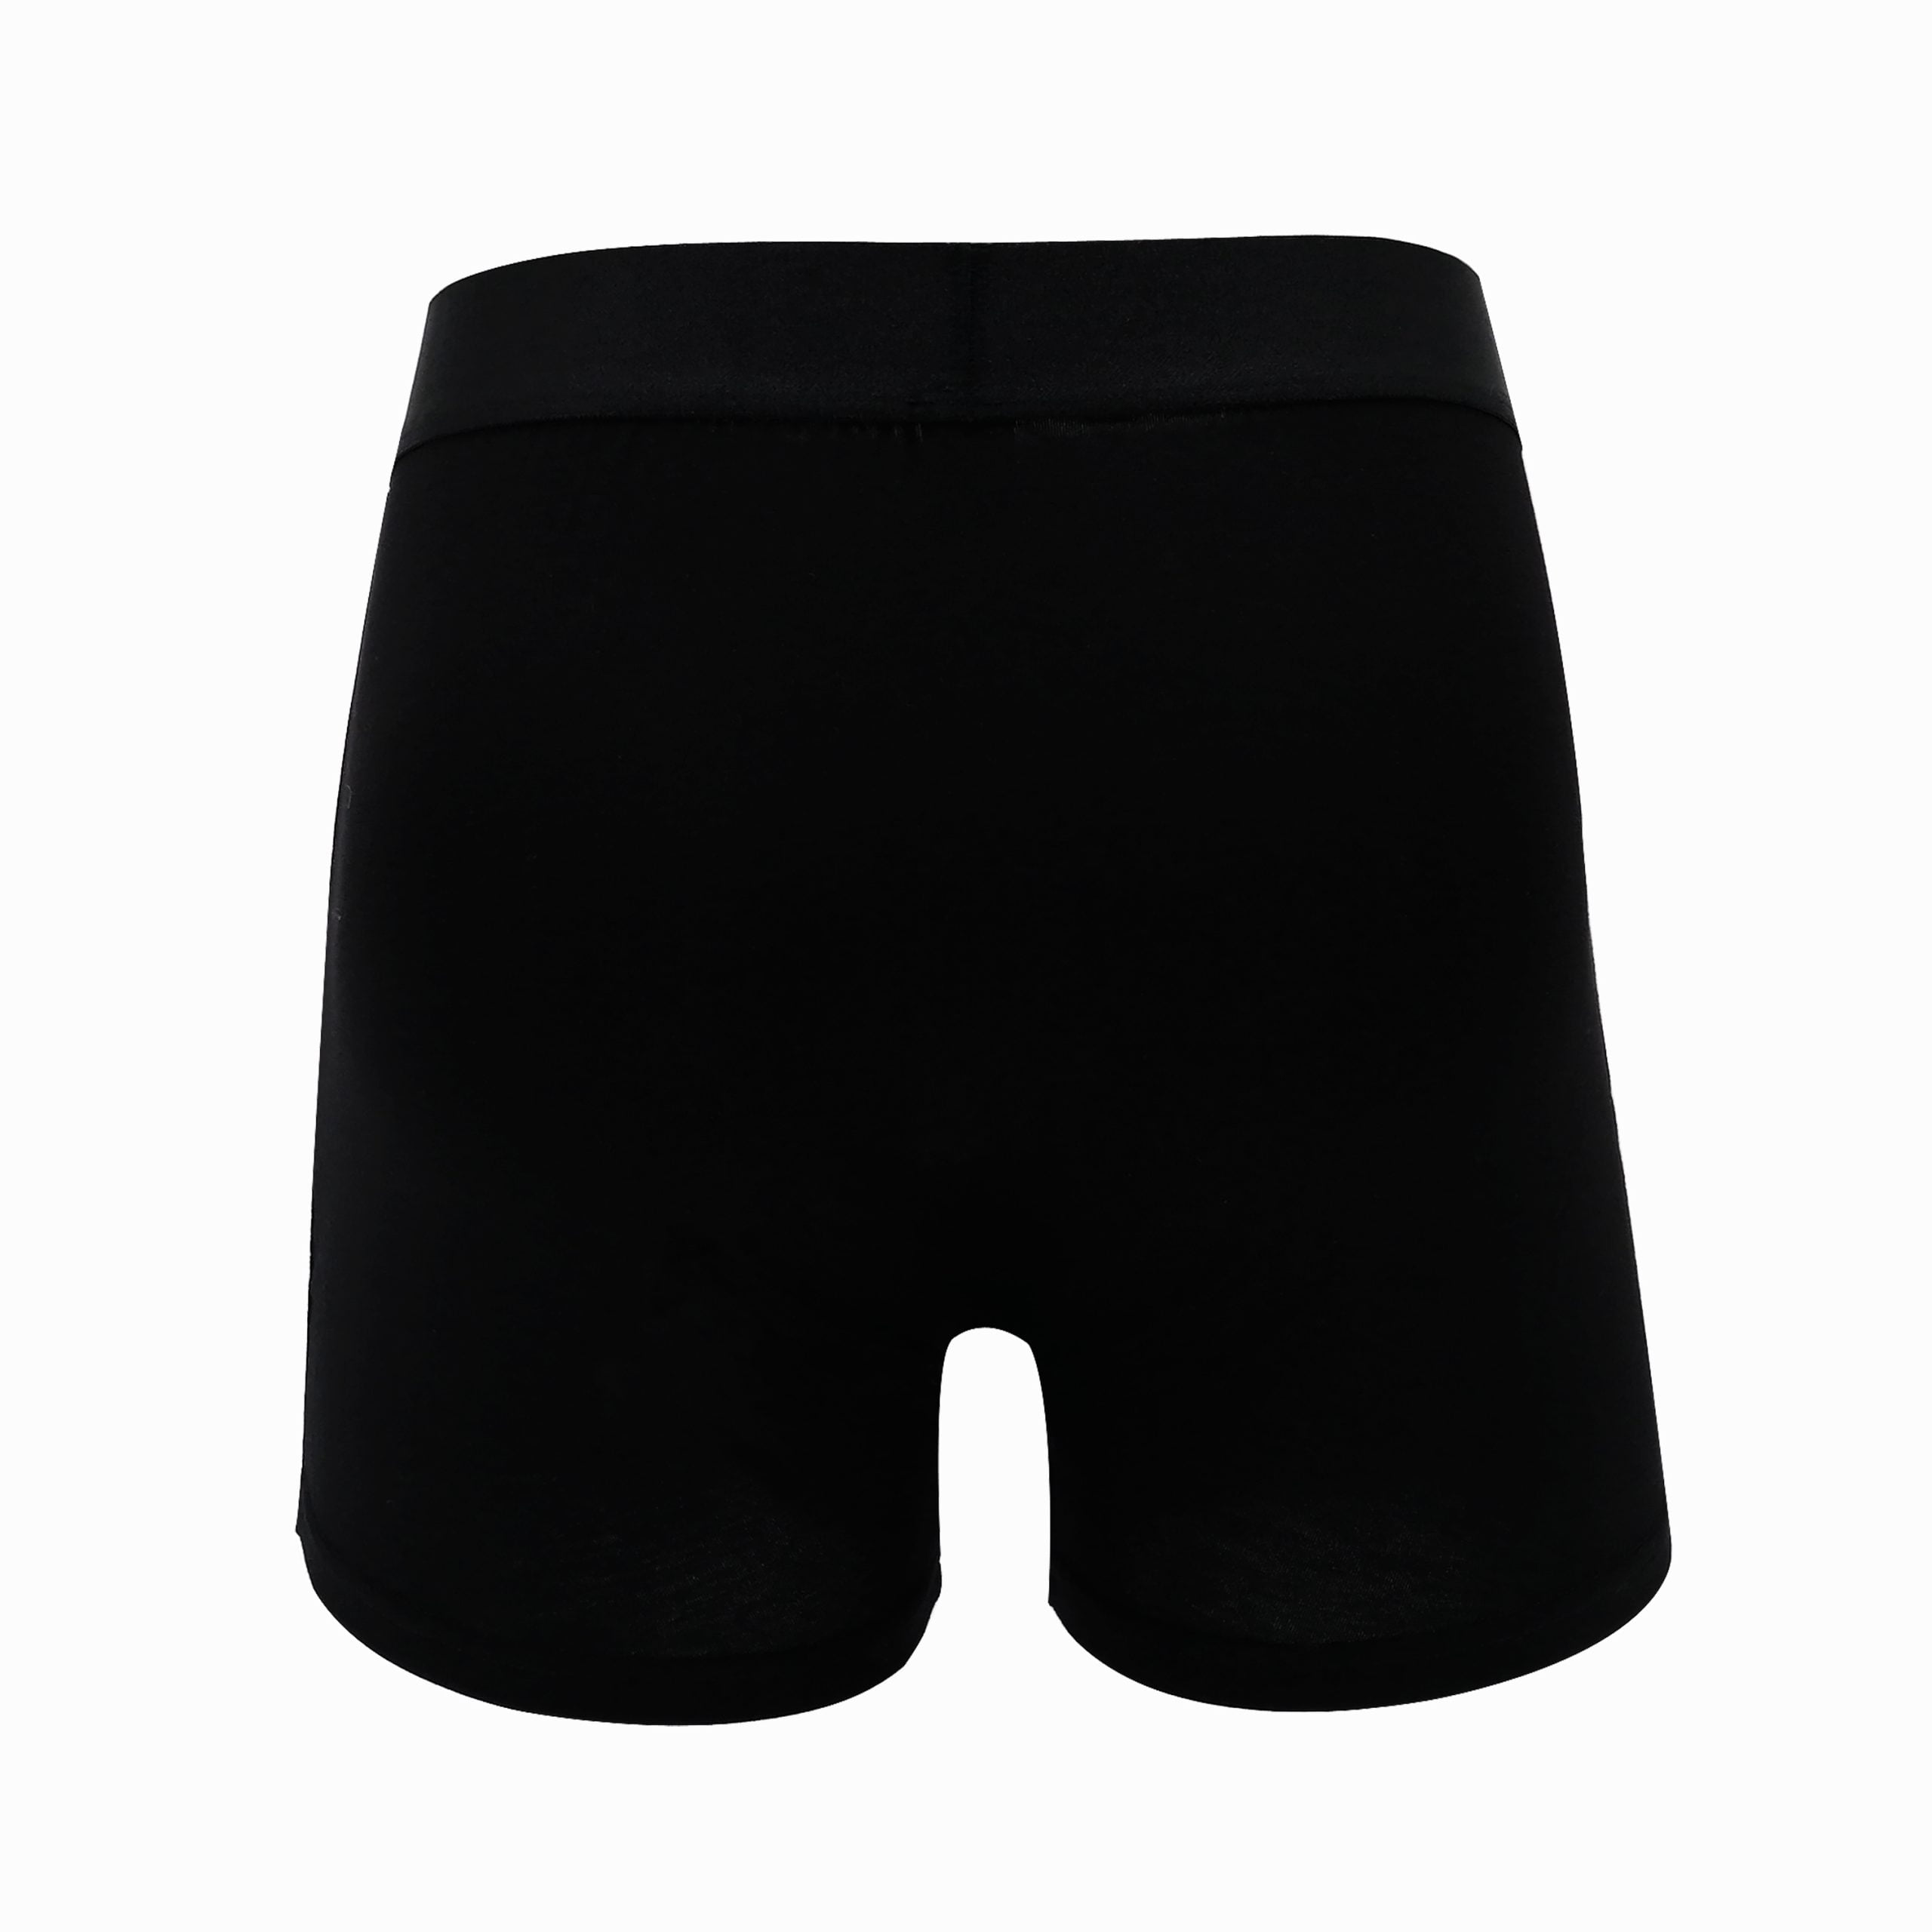 Women's Bamboo Underwear - Boxer